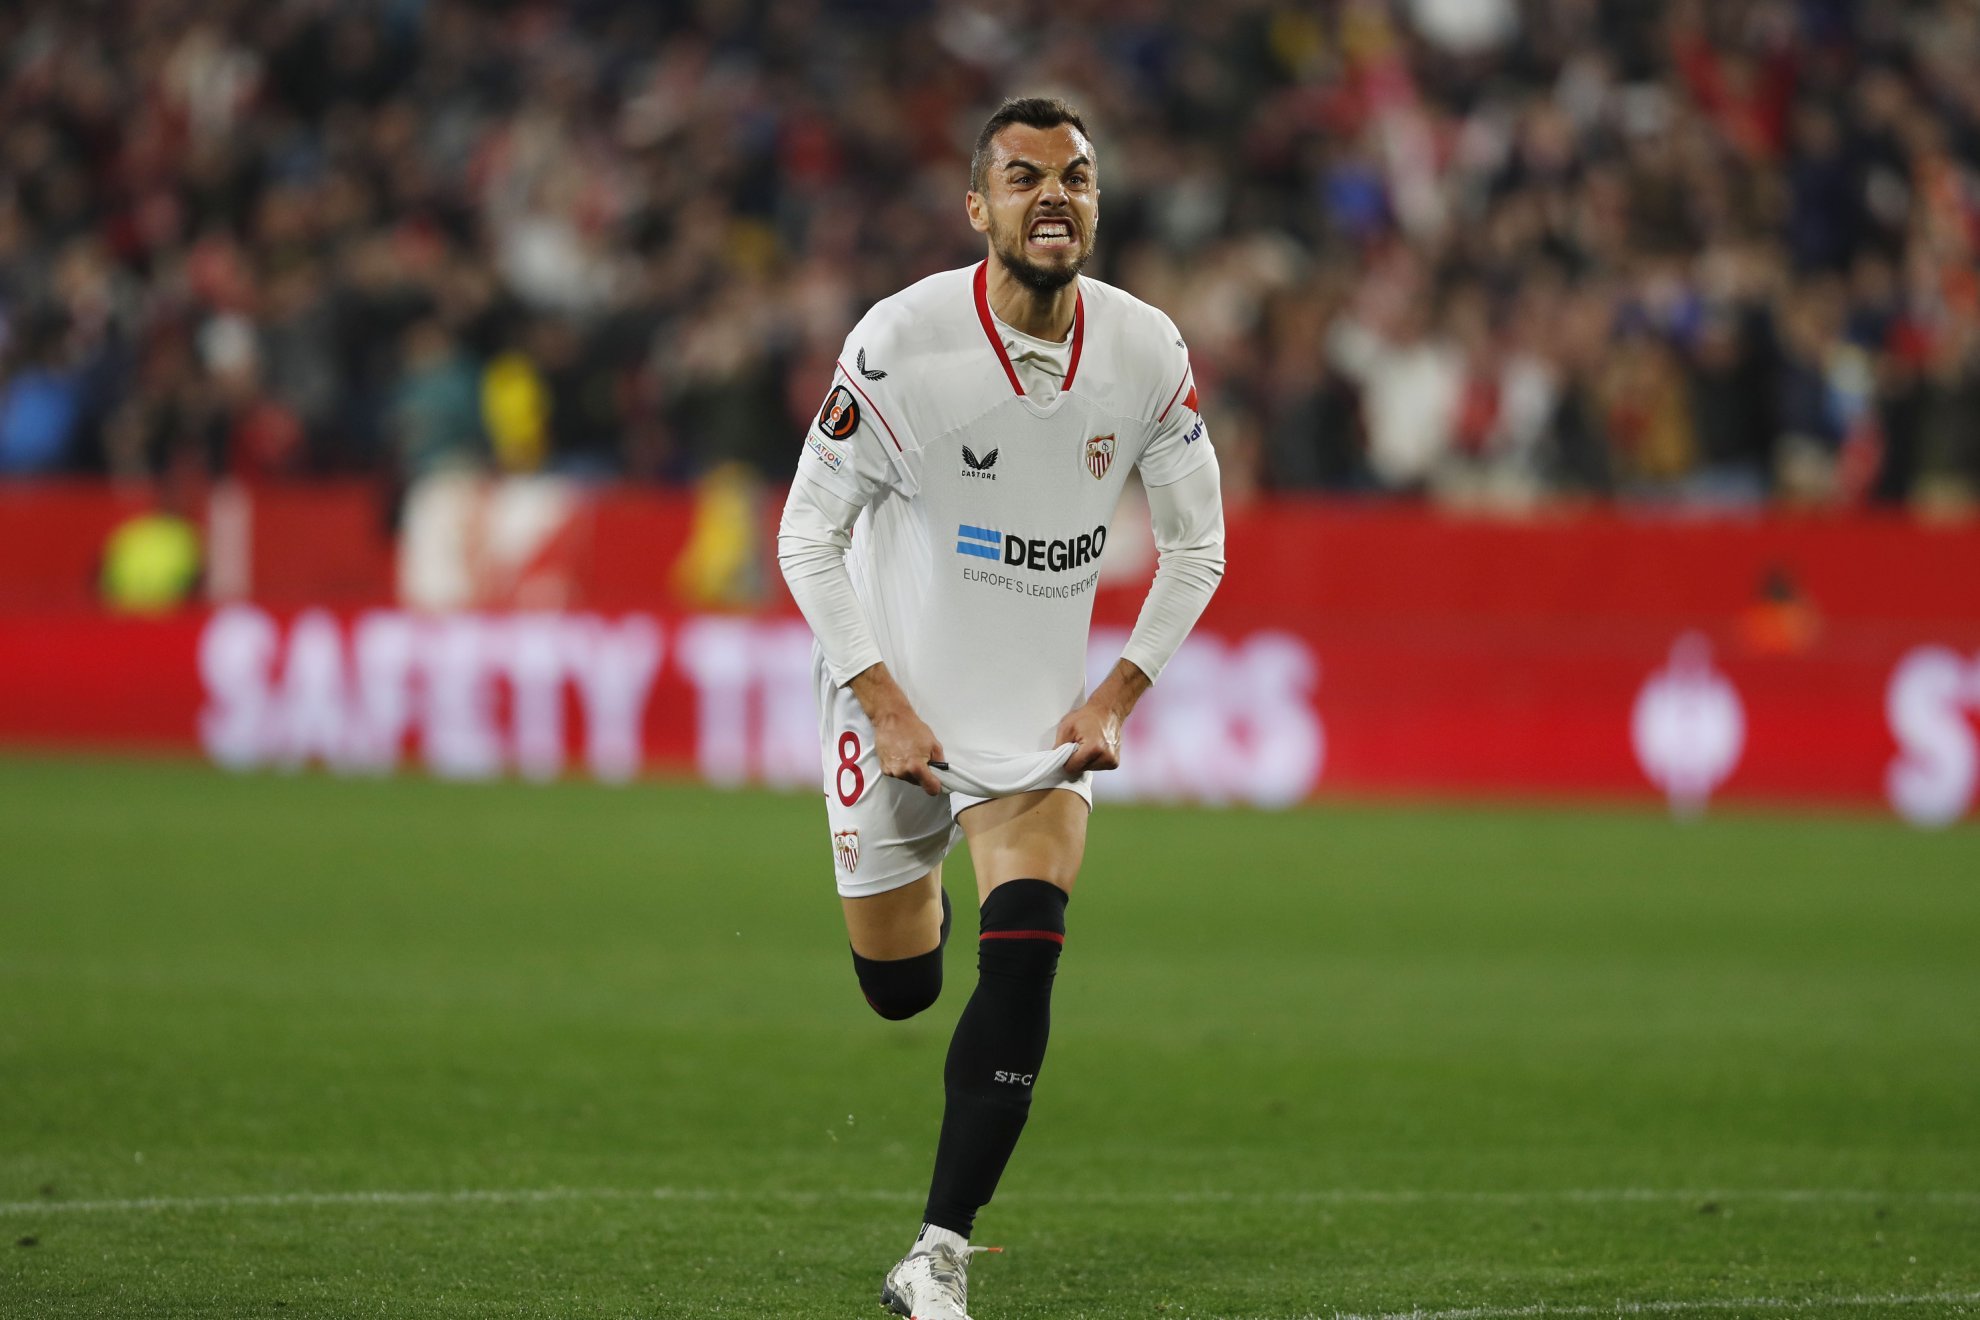 Jordn celebra el primer gol del Sevilla ante el Fenerbahe.